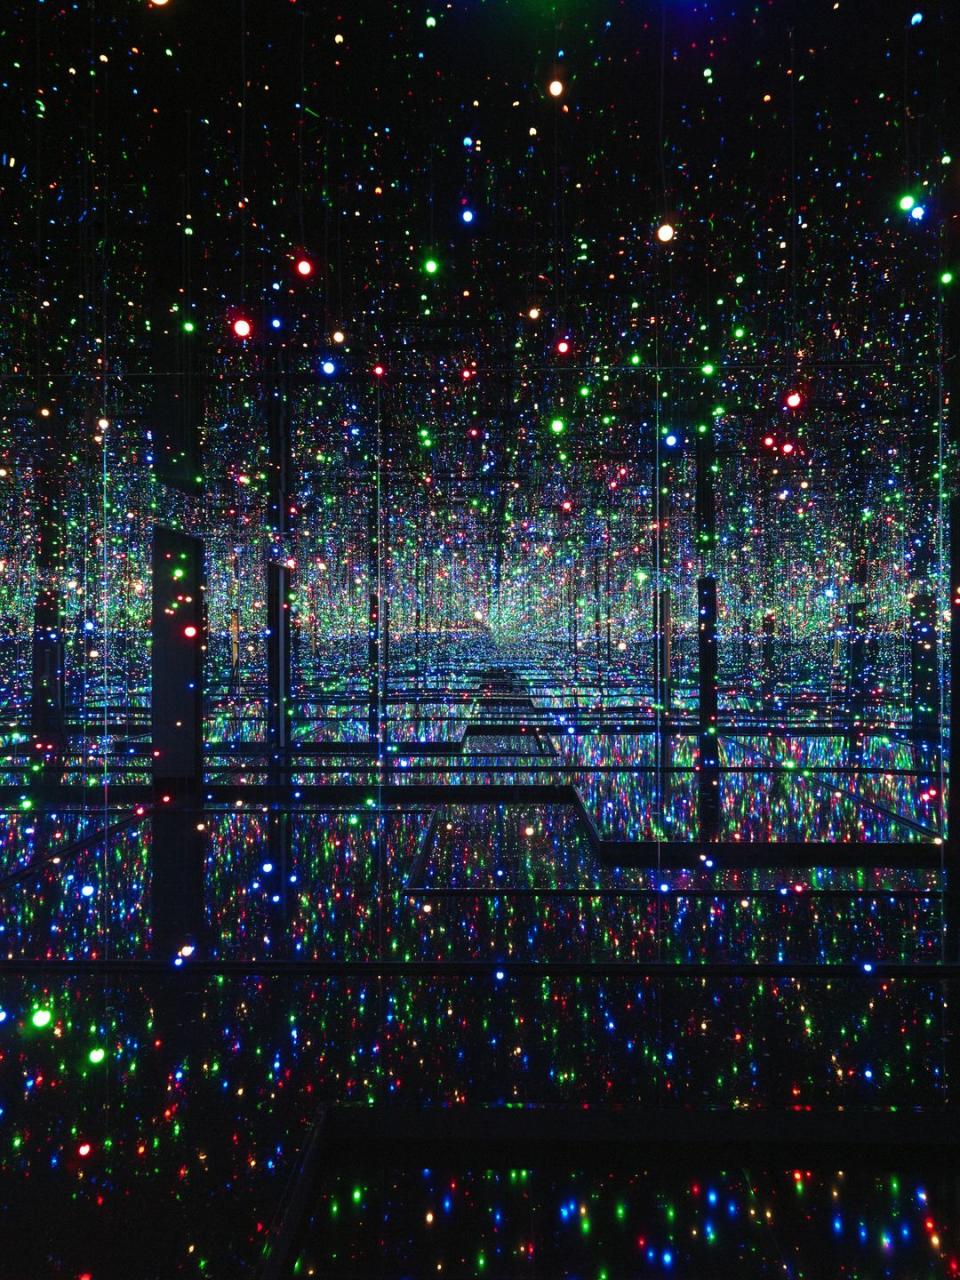 2) ‘Yayoi Kusama: Infinity Mirror Rooms’ at Tate Modern